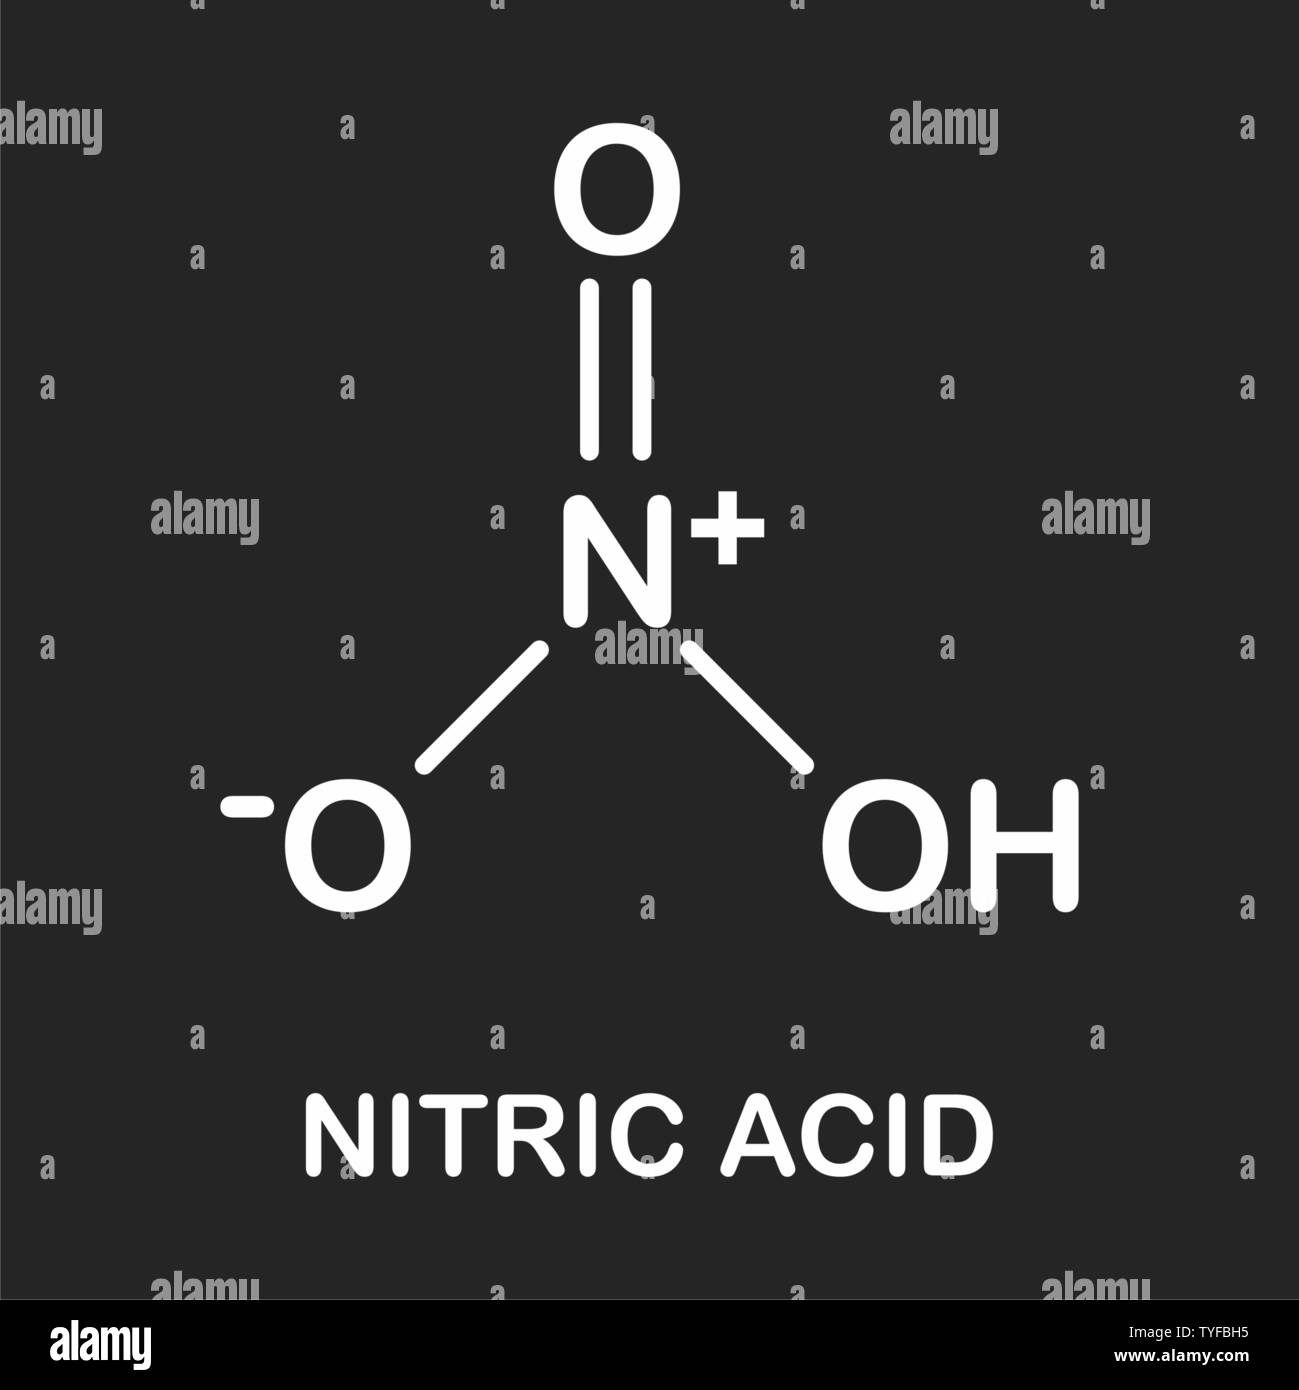 Illustration of Nitric Acid formula on dark background Stock Vector ...